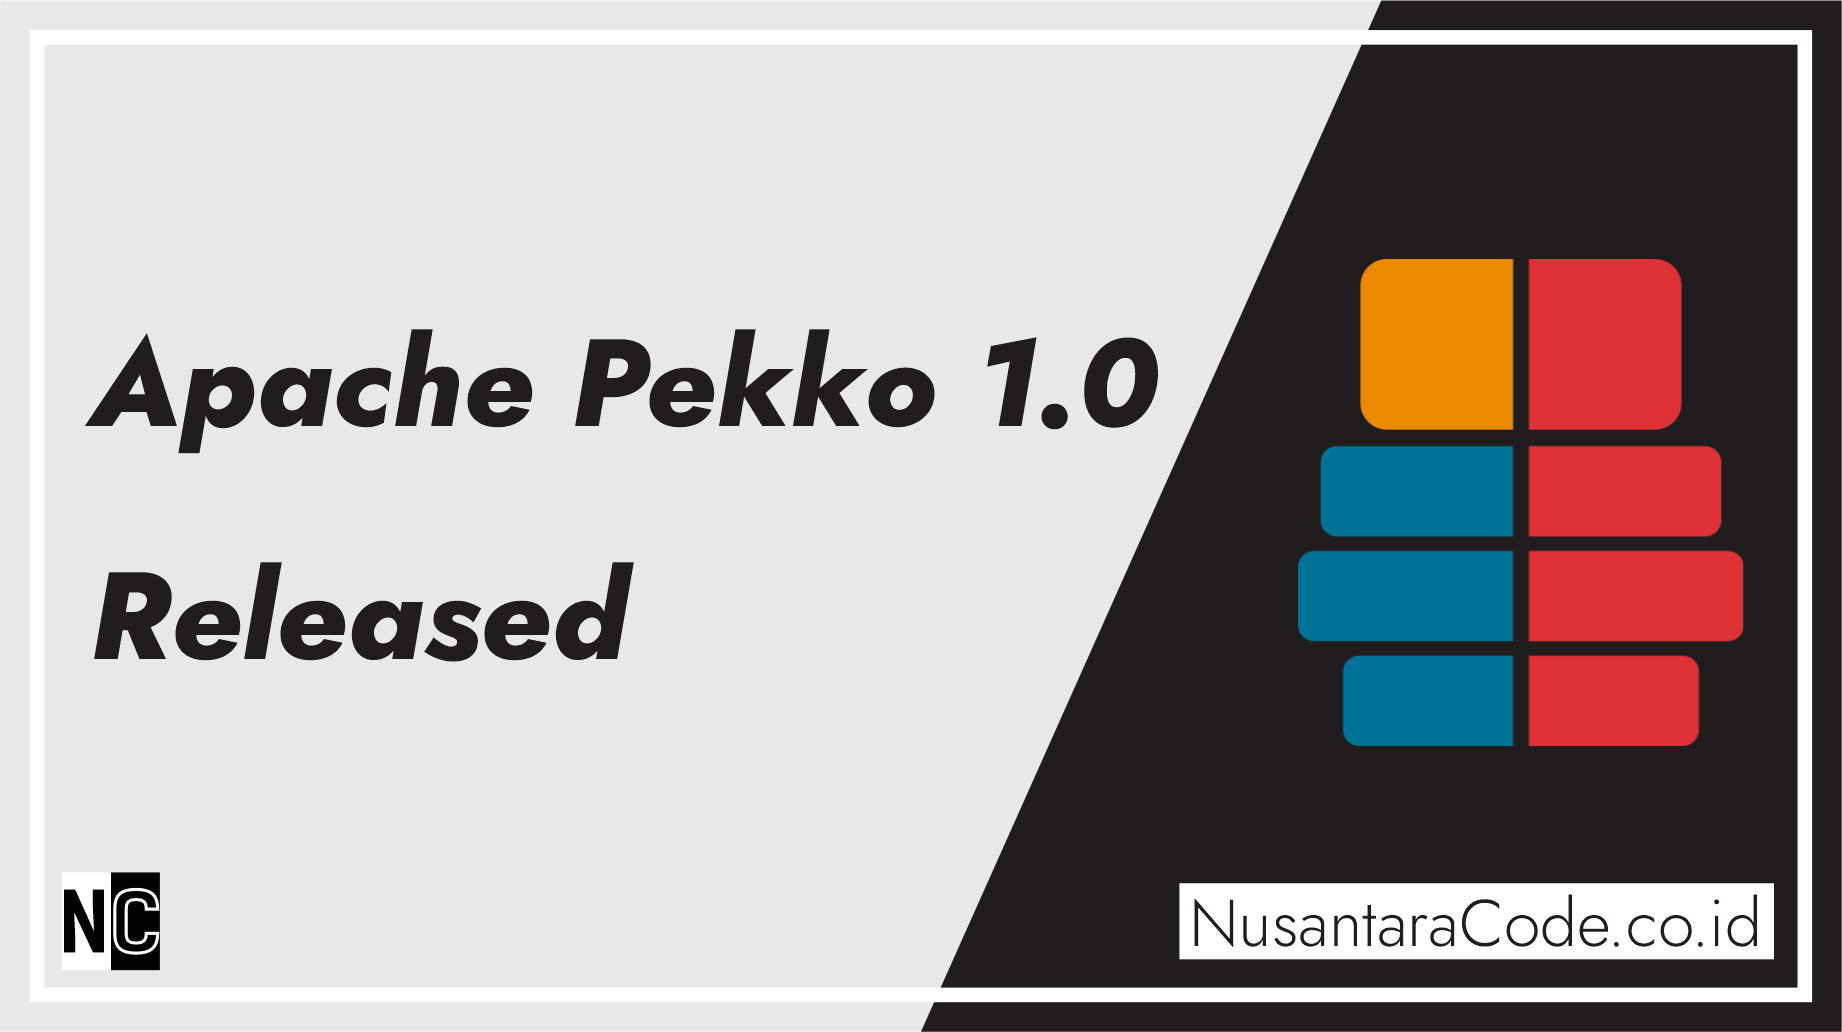 Apache Pekko 1.0 Released